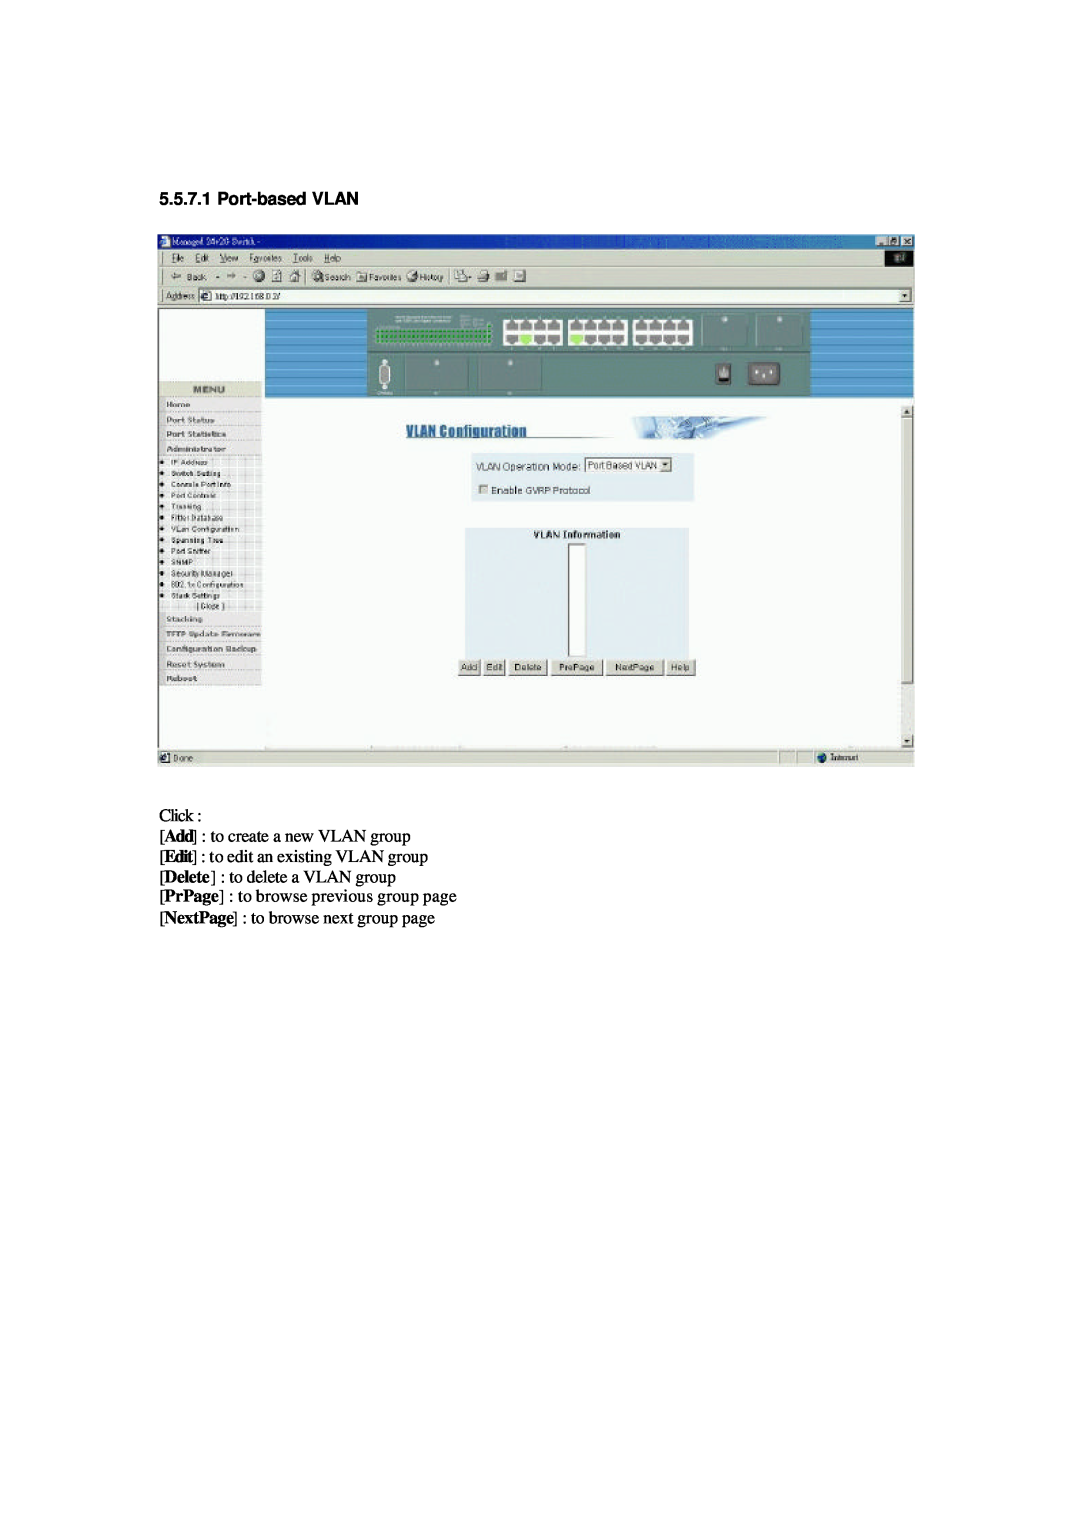 Xerox NS-2260 Port-basedVLAN, Click Add : to create a new VLAN group, Edit : to edit an existing VLAN group 